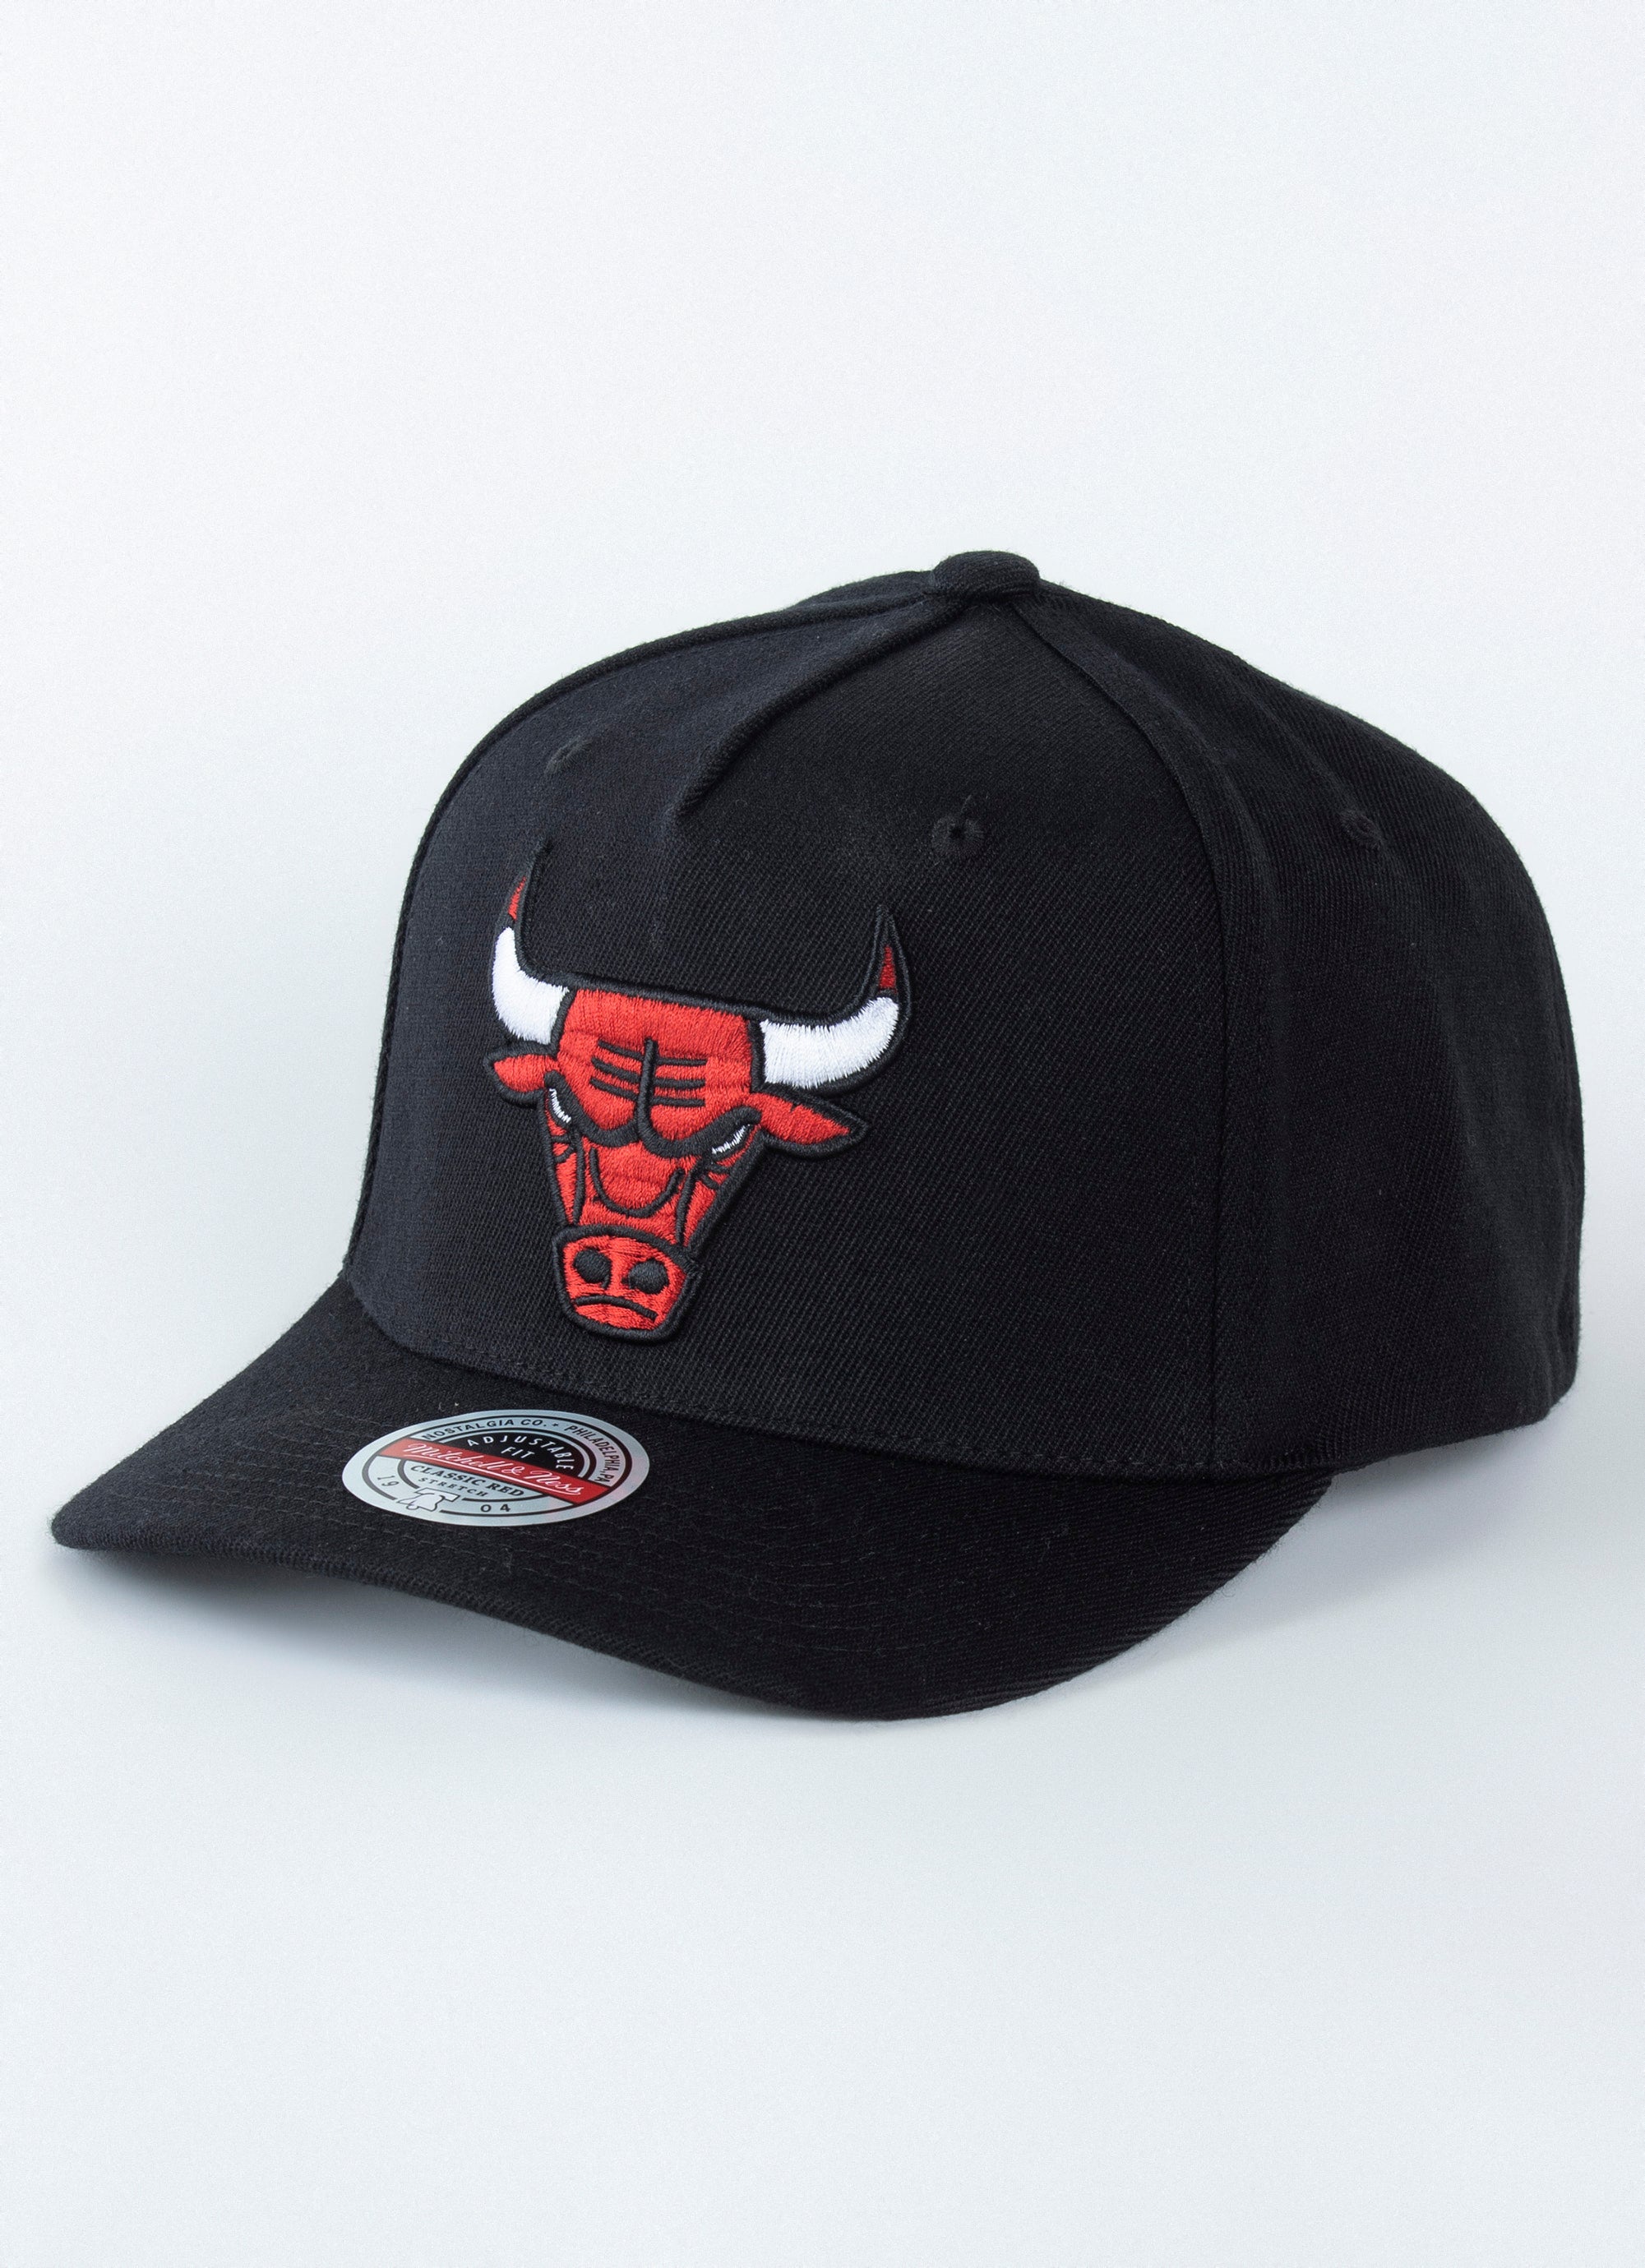 Mitchell & Ness 110 Chicago Bulls snapback cap in black